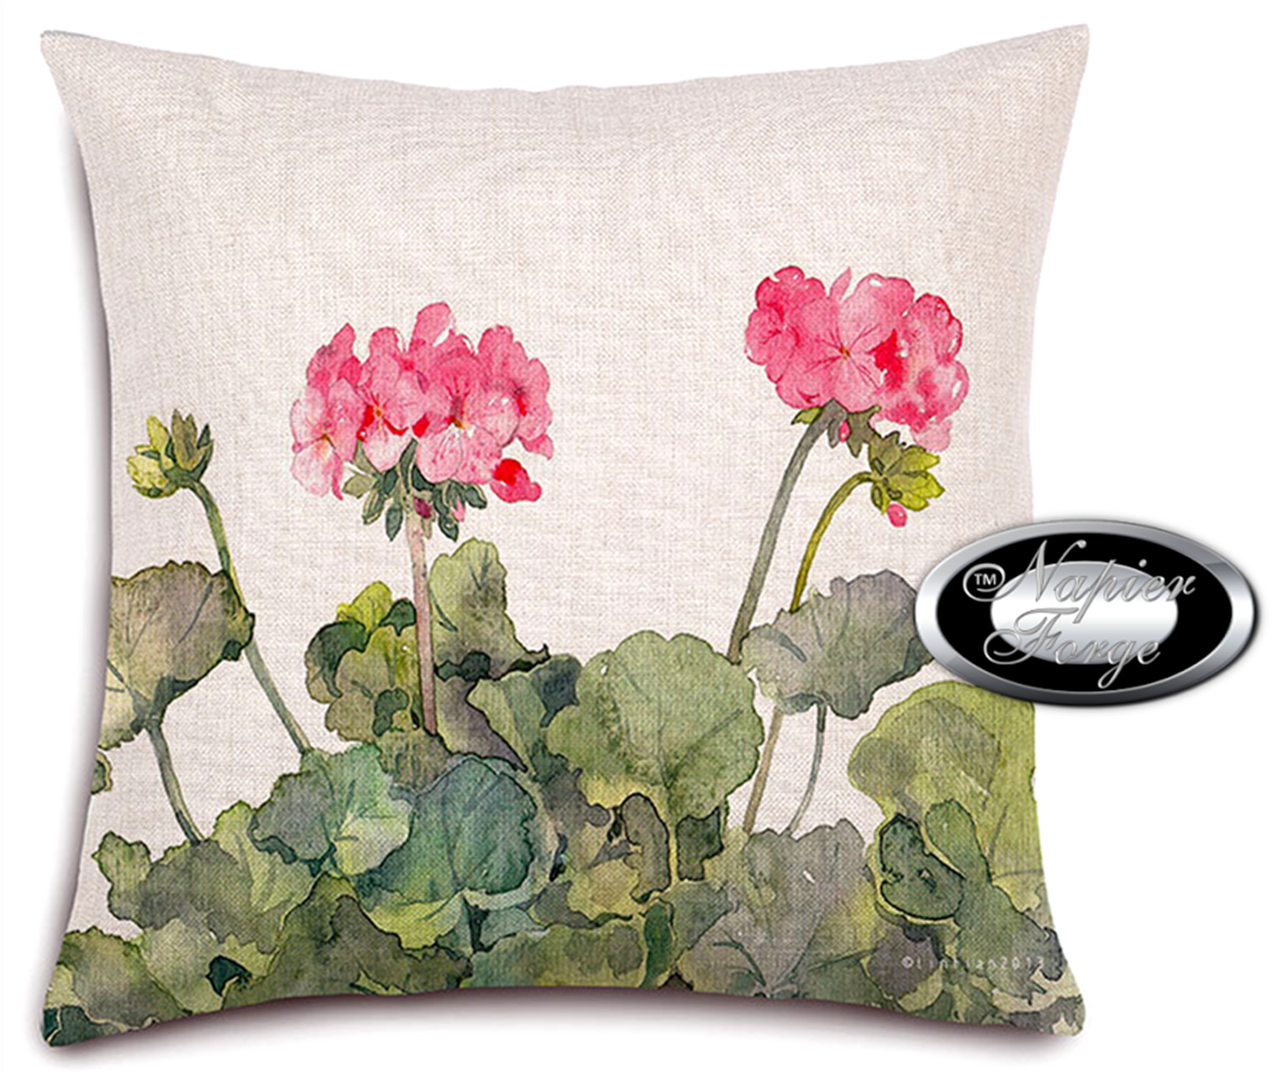 Farmhouse Cotton Linen Blend Cushion Cover 45cm x 45cm - Design Classic Geranium *Free Shipping